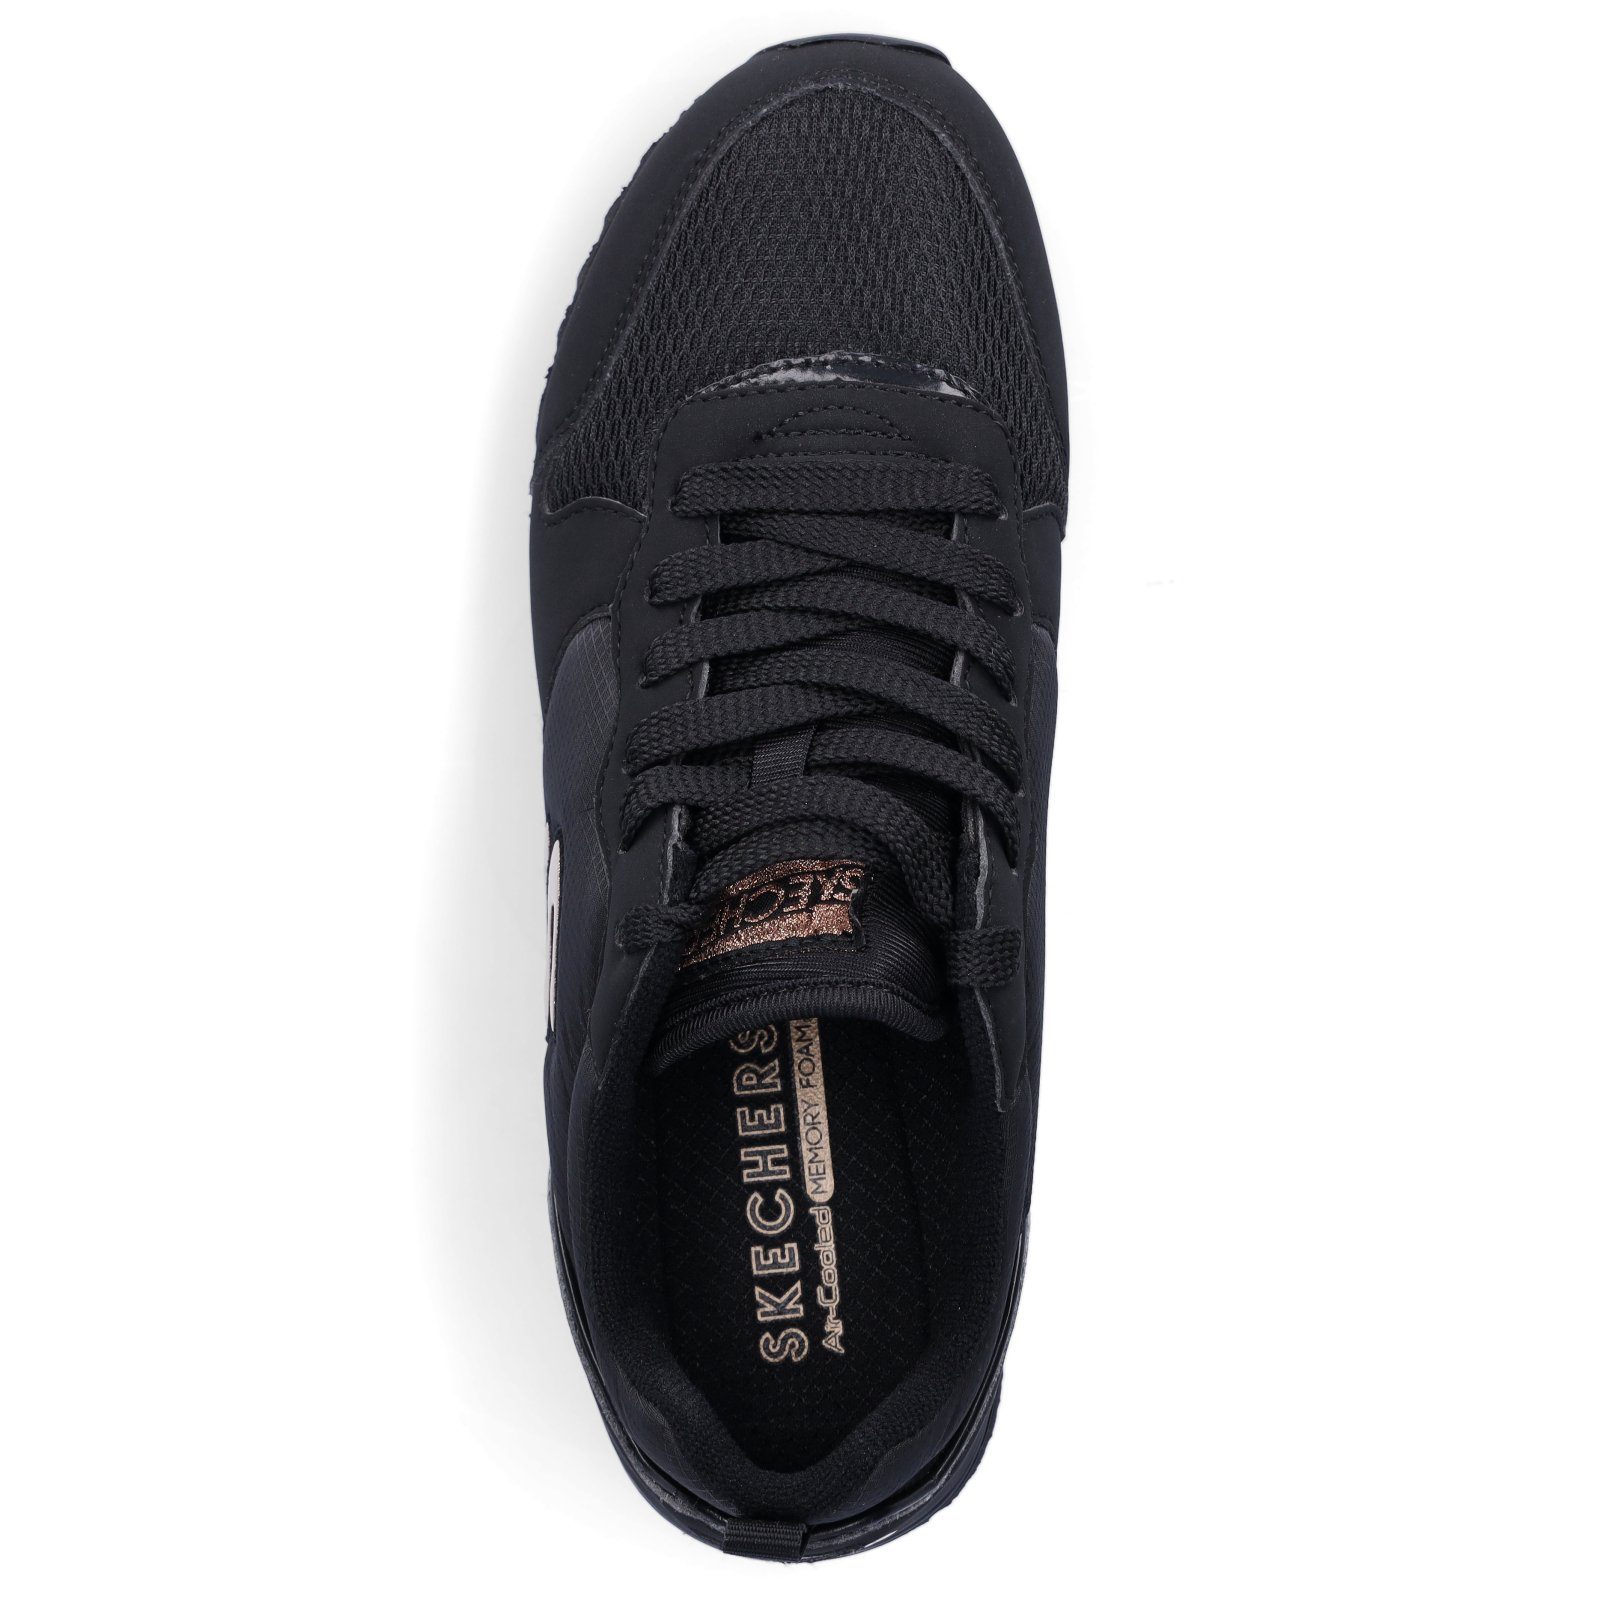 Skechers 85-2KEWL OG Sneaker Sneaker Skechers black/black schwarz Damen